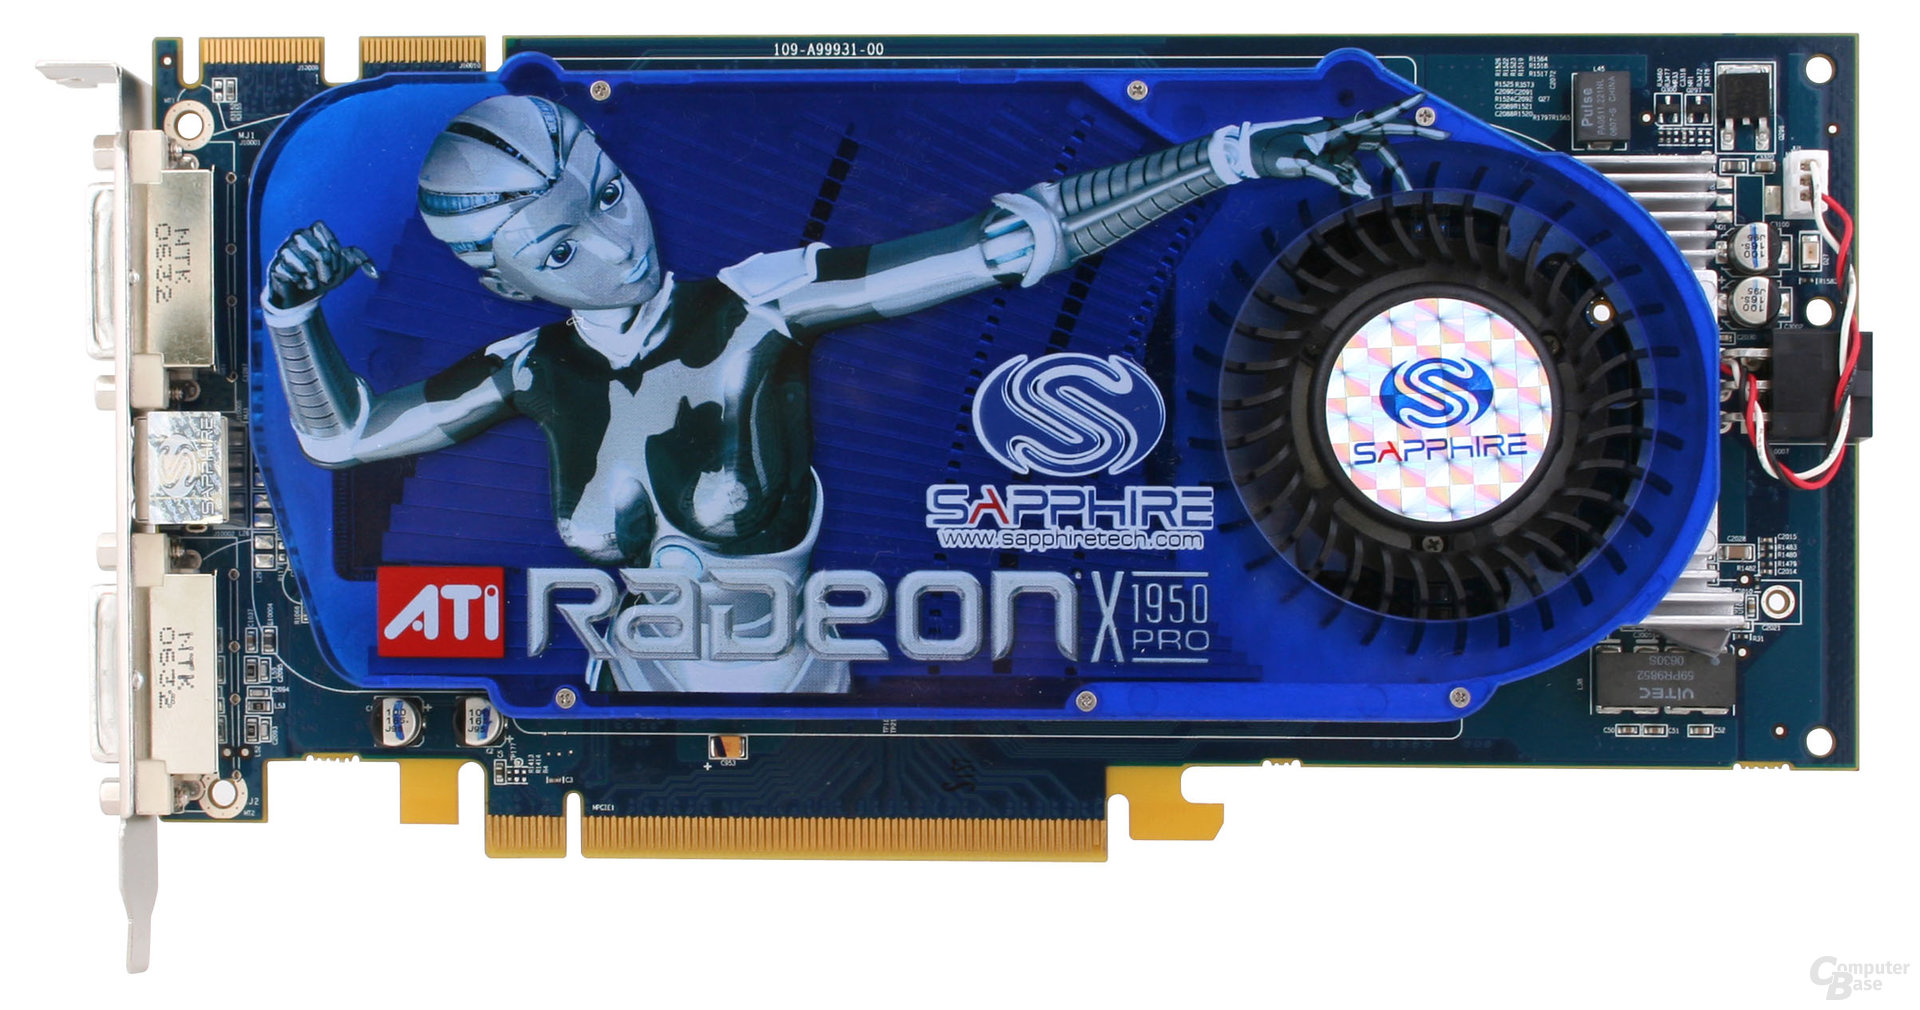 Sapphire Radeon X1950 Pro